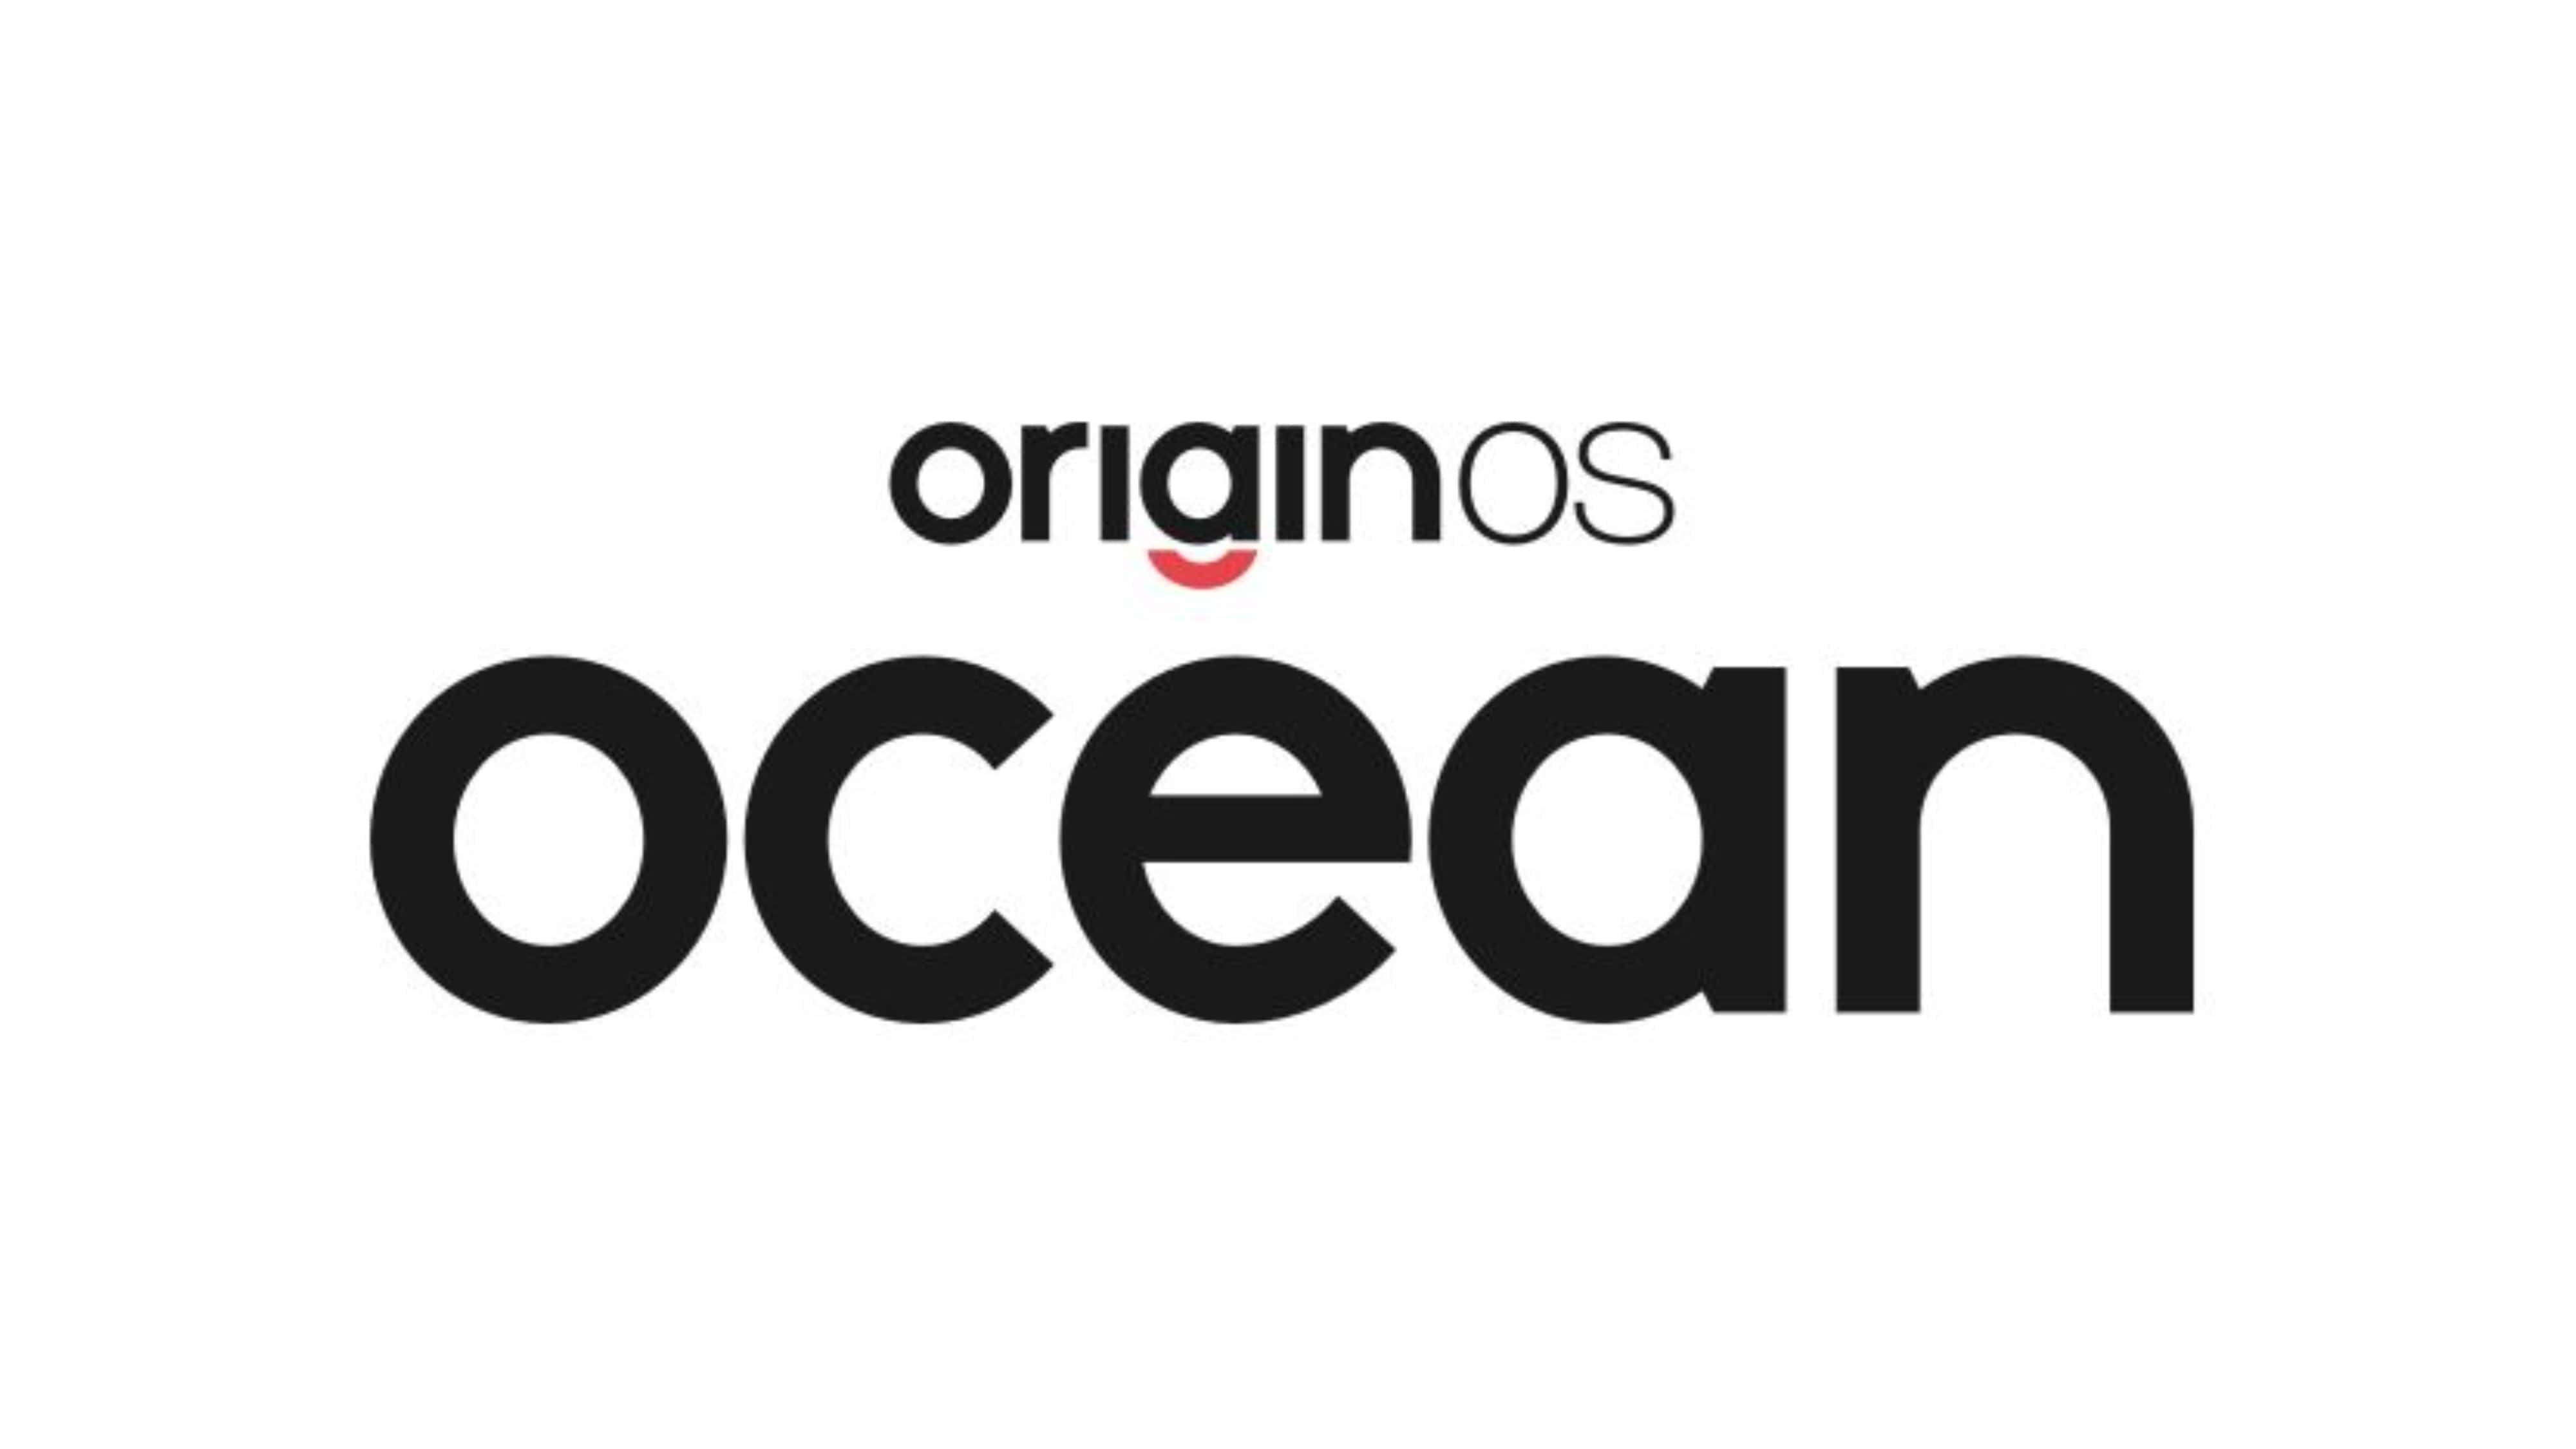 Originos. Originos 13.0. Iqoo logo. Vivo Wallpapers Iqoo. Logo Iqoo Phone.